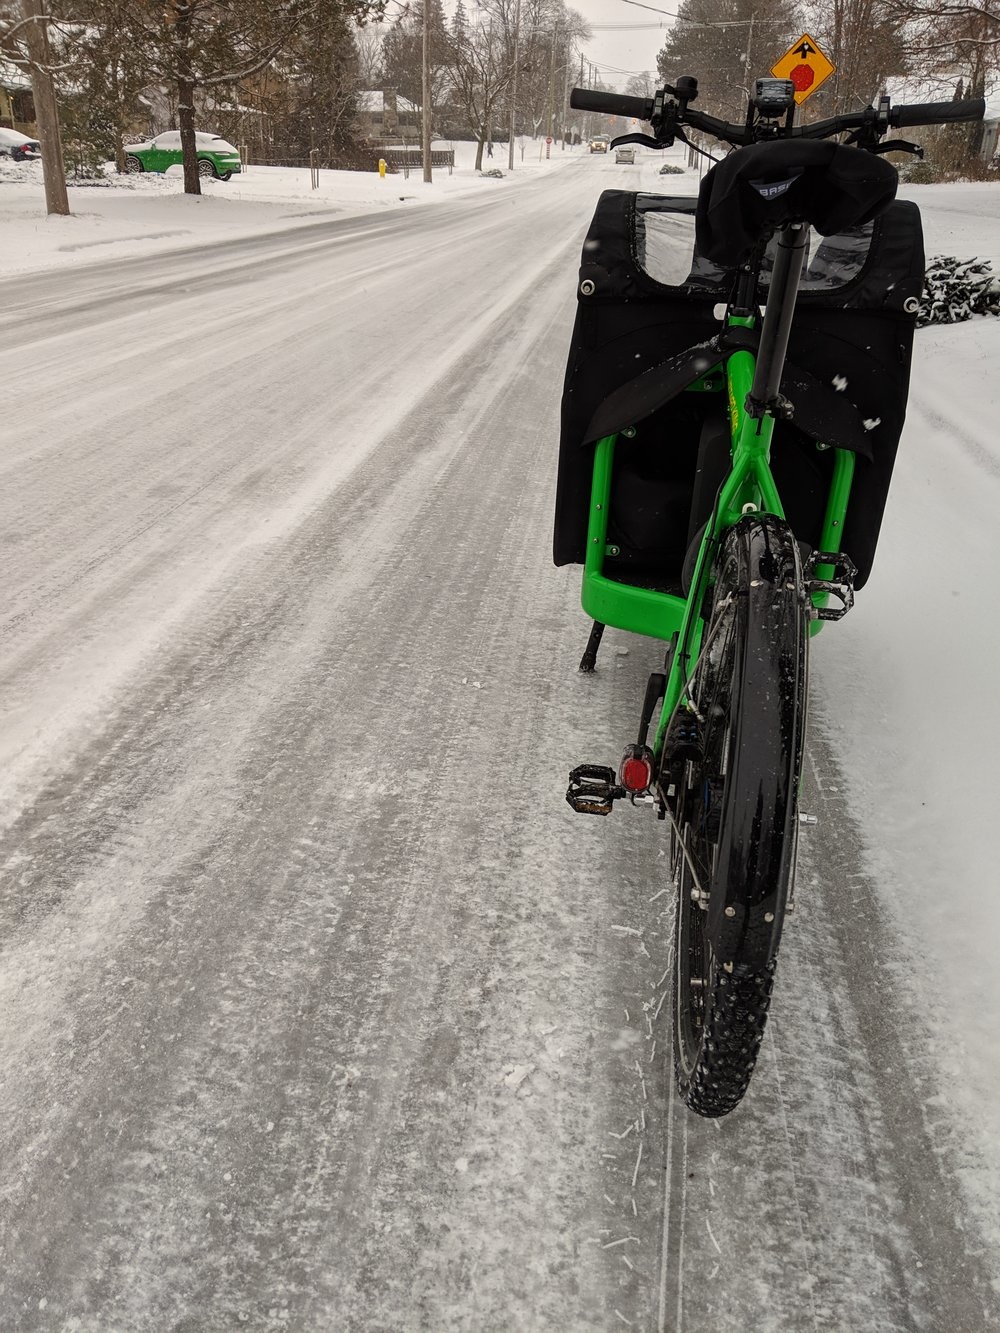 The Bullitt rides a snowy path.